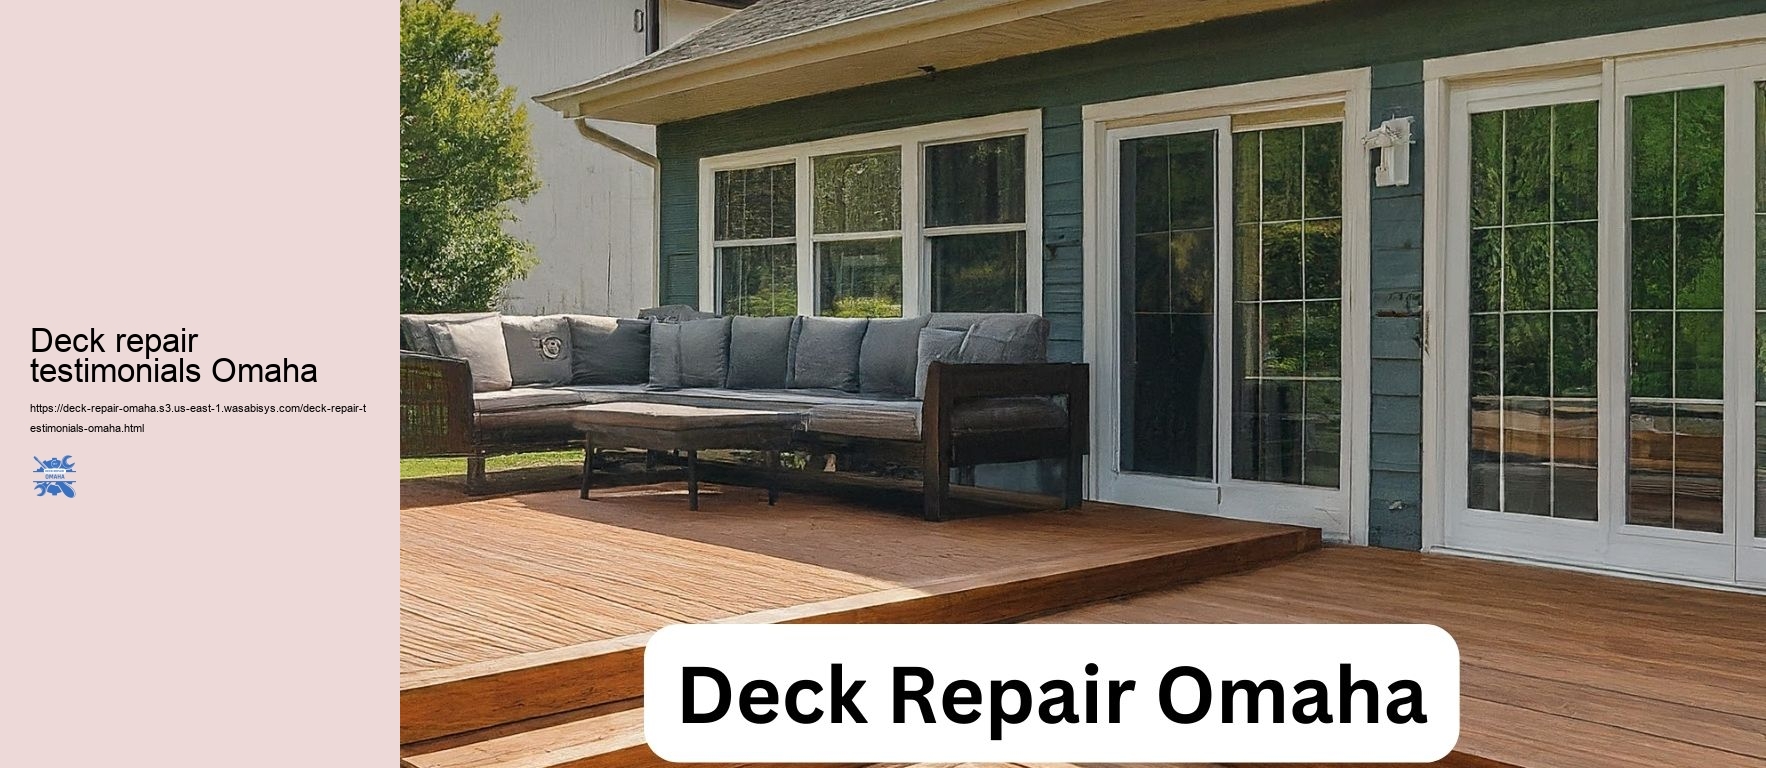 Deck repair testimonials Omaha